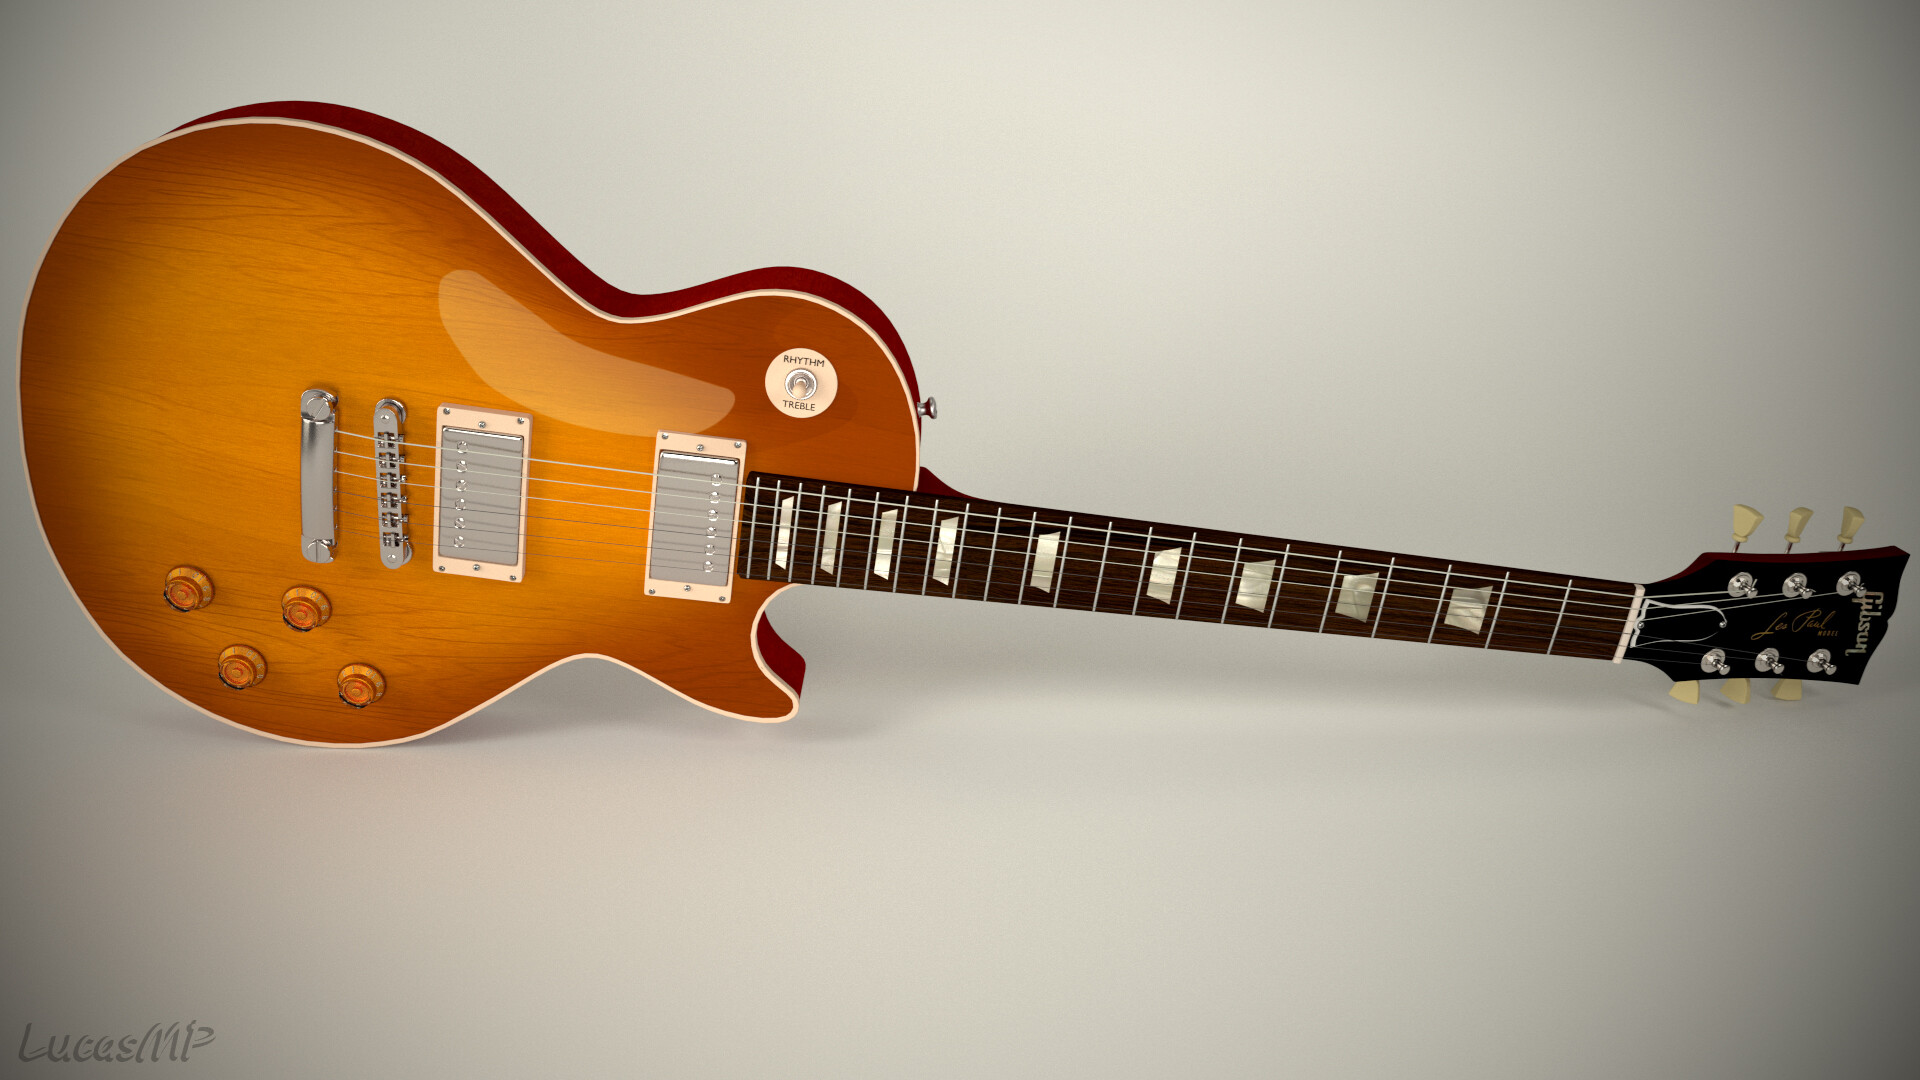 Gibson Guitar: The Joe Perry Boneyard Les Paul, An extremely rare musical instrument. 1920x1080 Full HD Wallpaper.